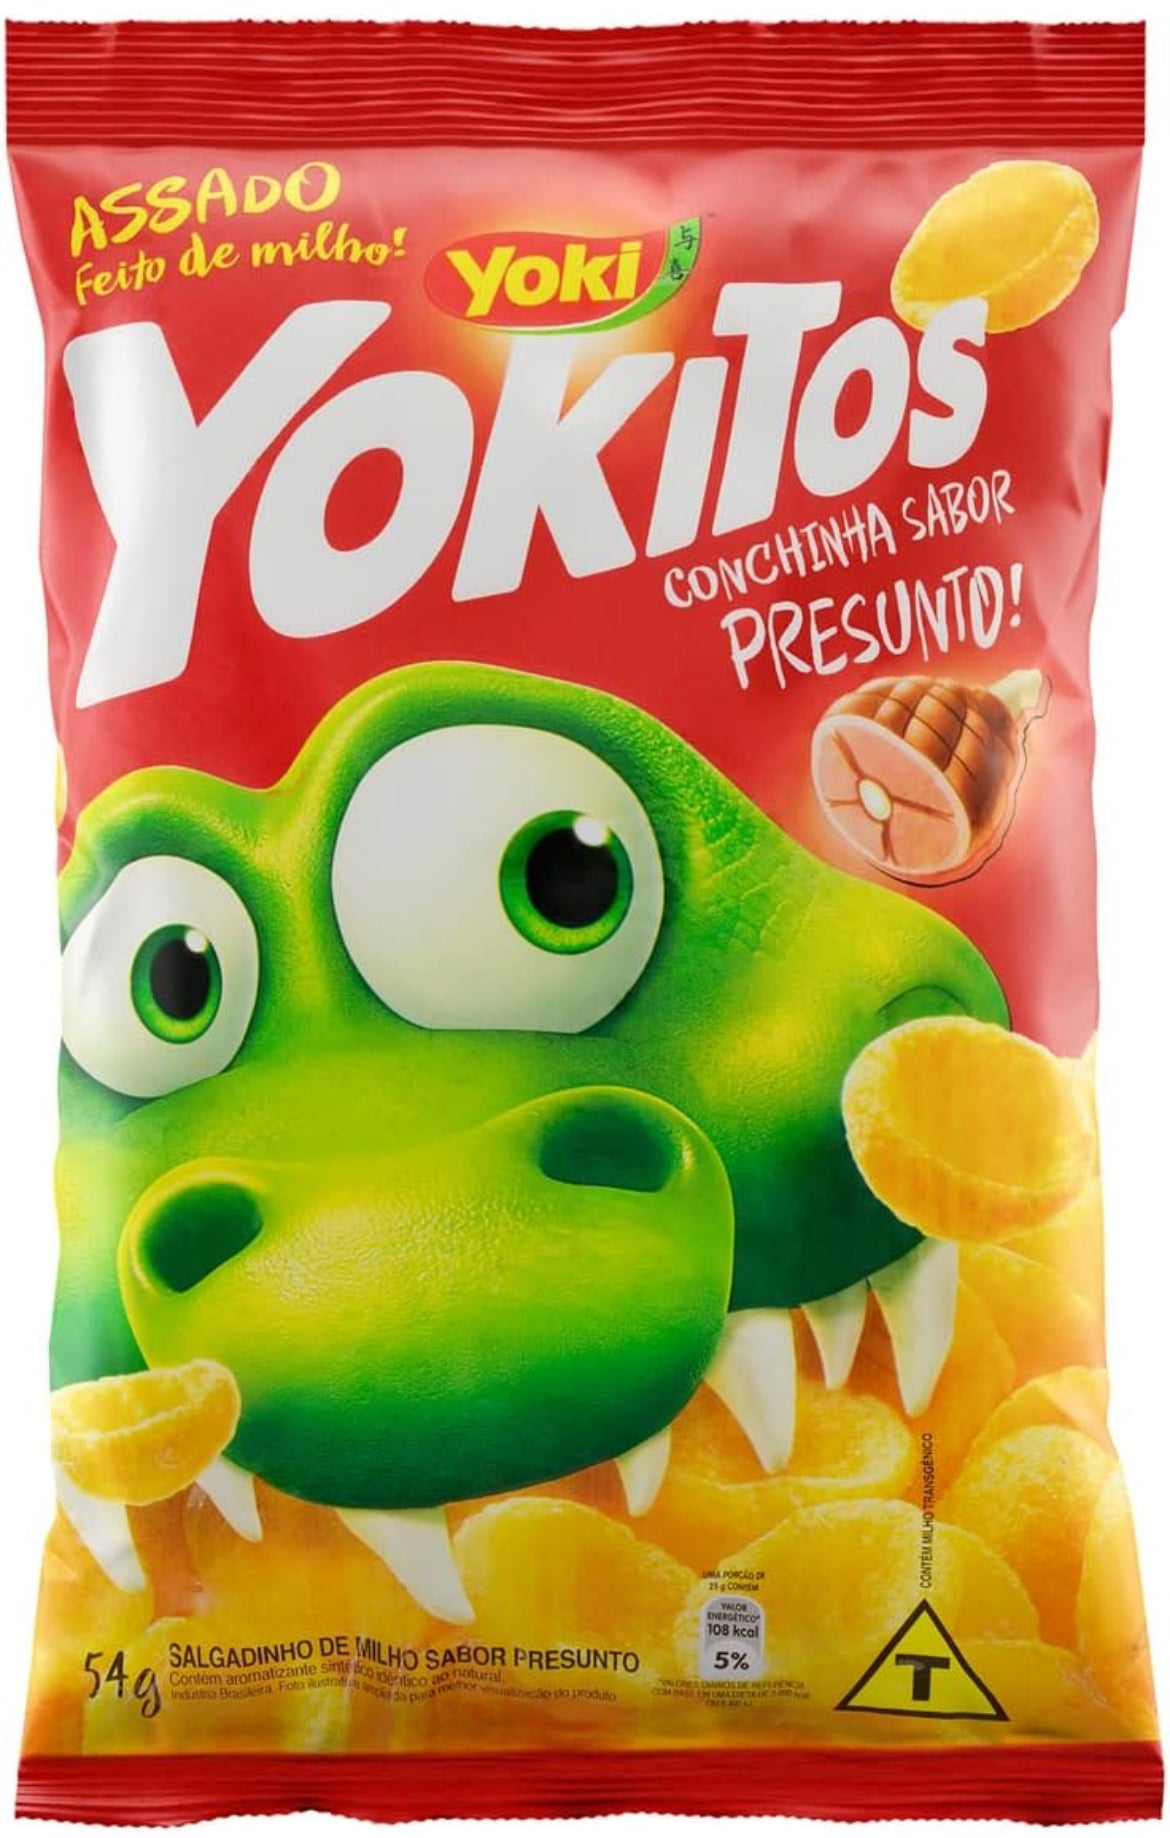 Yoki - Yokitos Concha Presunto, 1.9 oz, Single bag